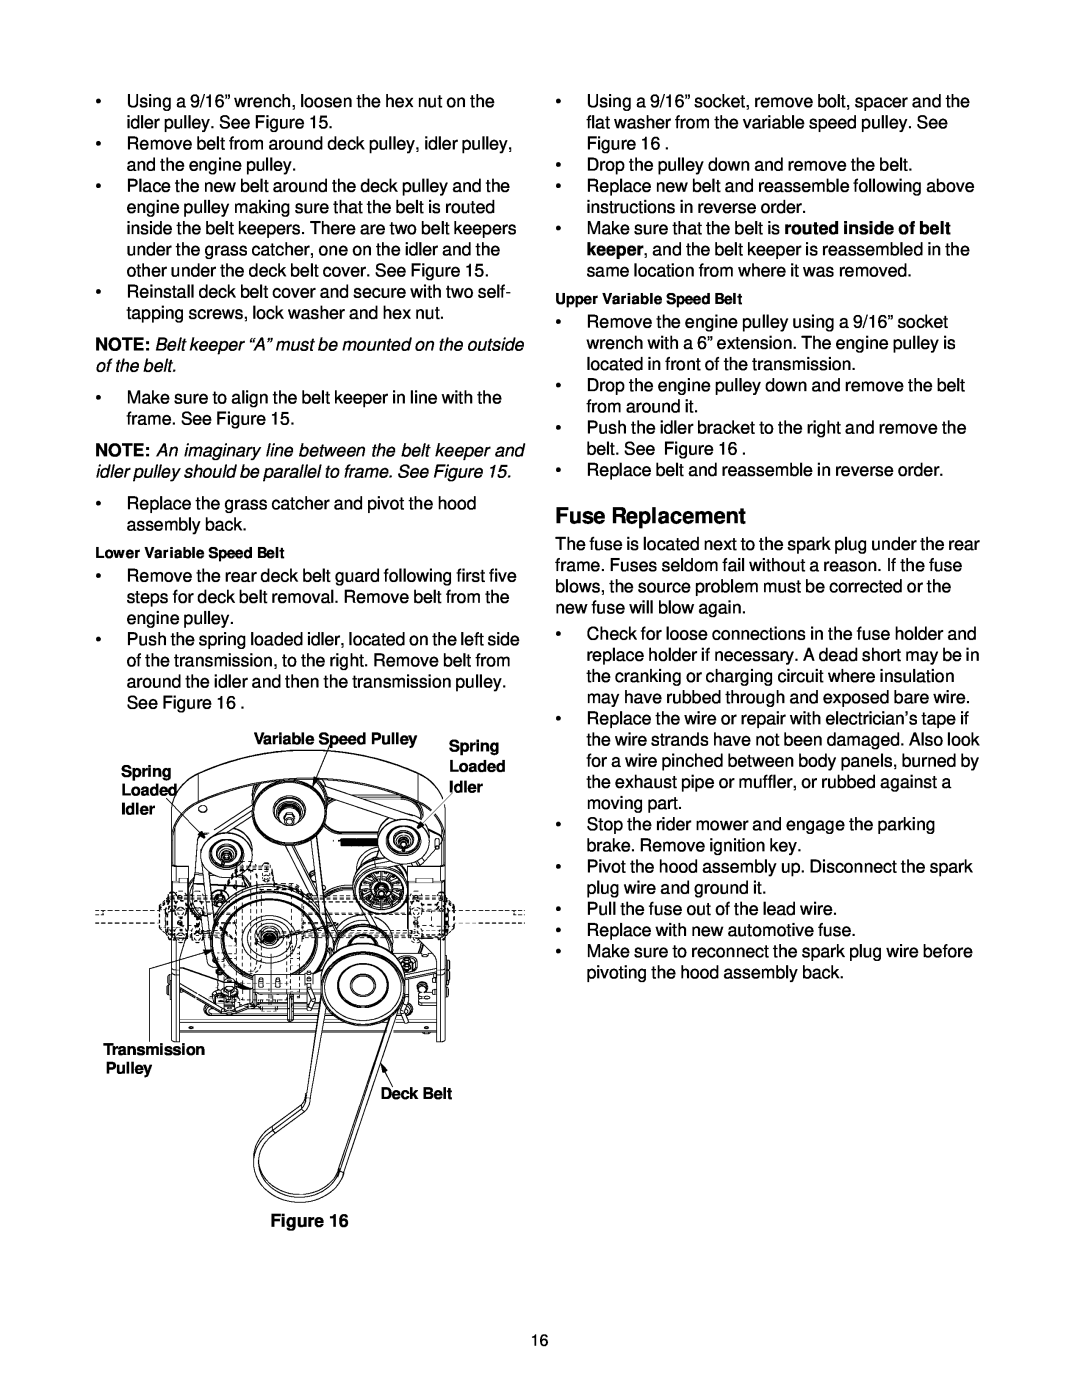 Yard-Man 13B-325-401 manual Fuse Replacement, Lower Variable Speed Belt, Upper Variable Speed Belt 